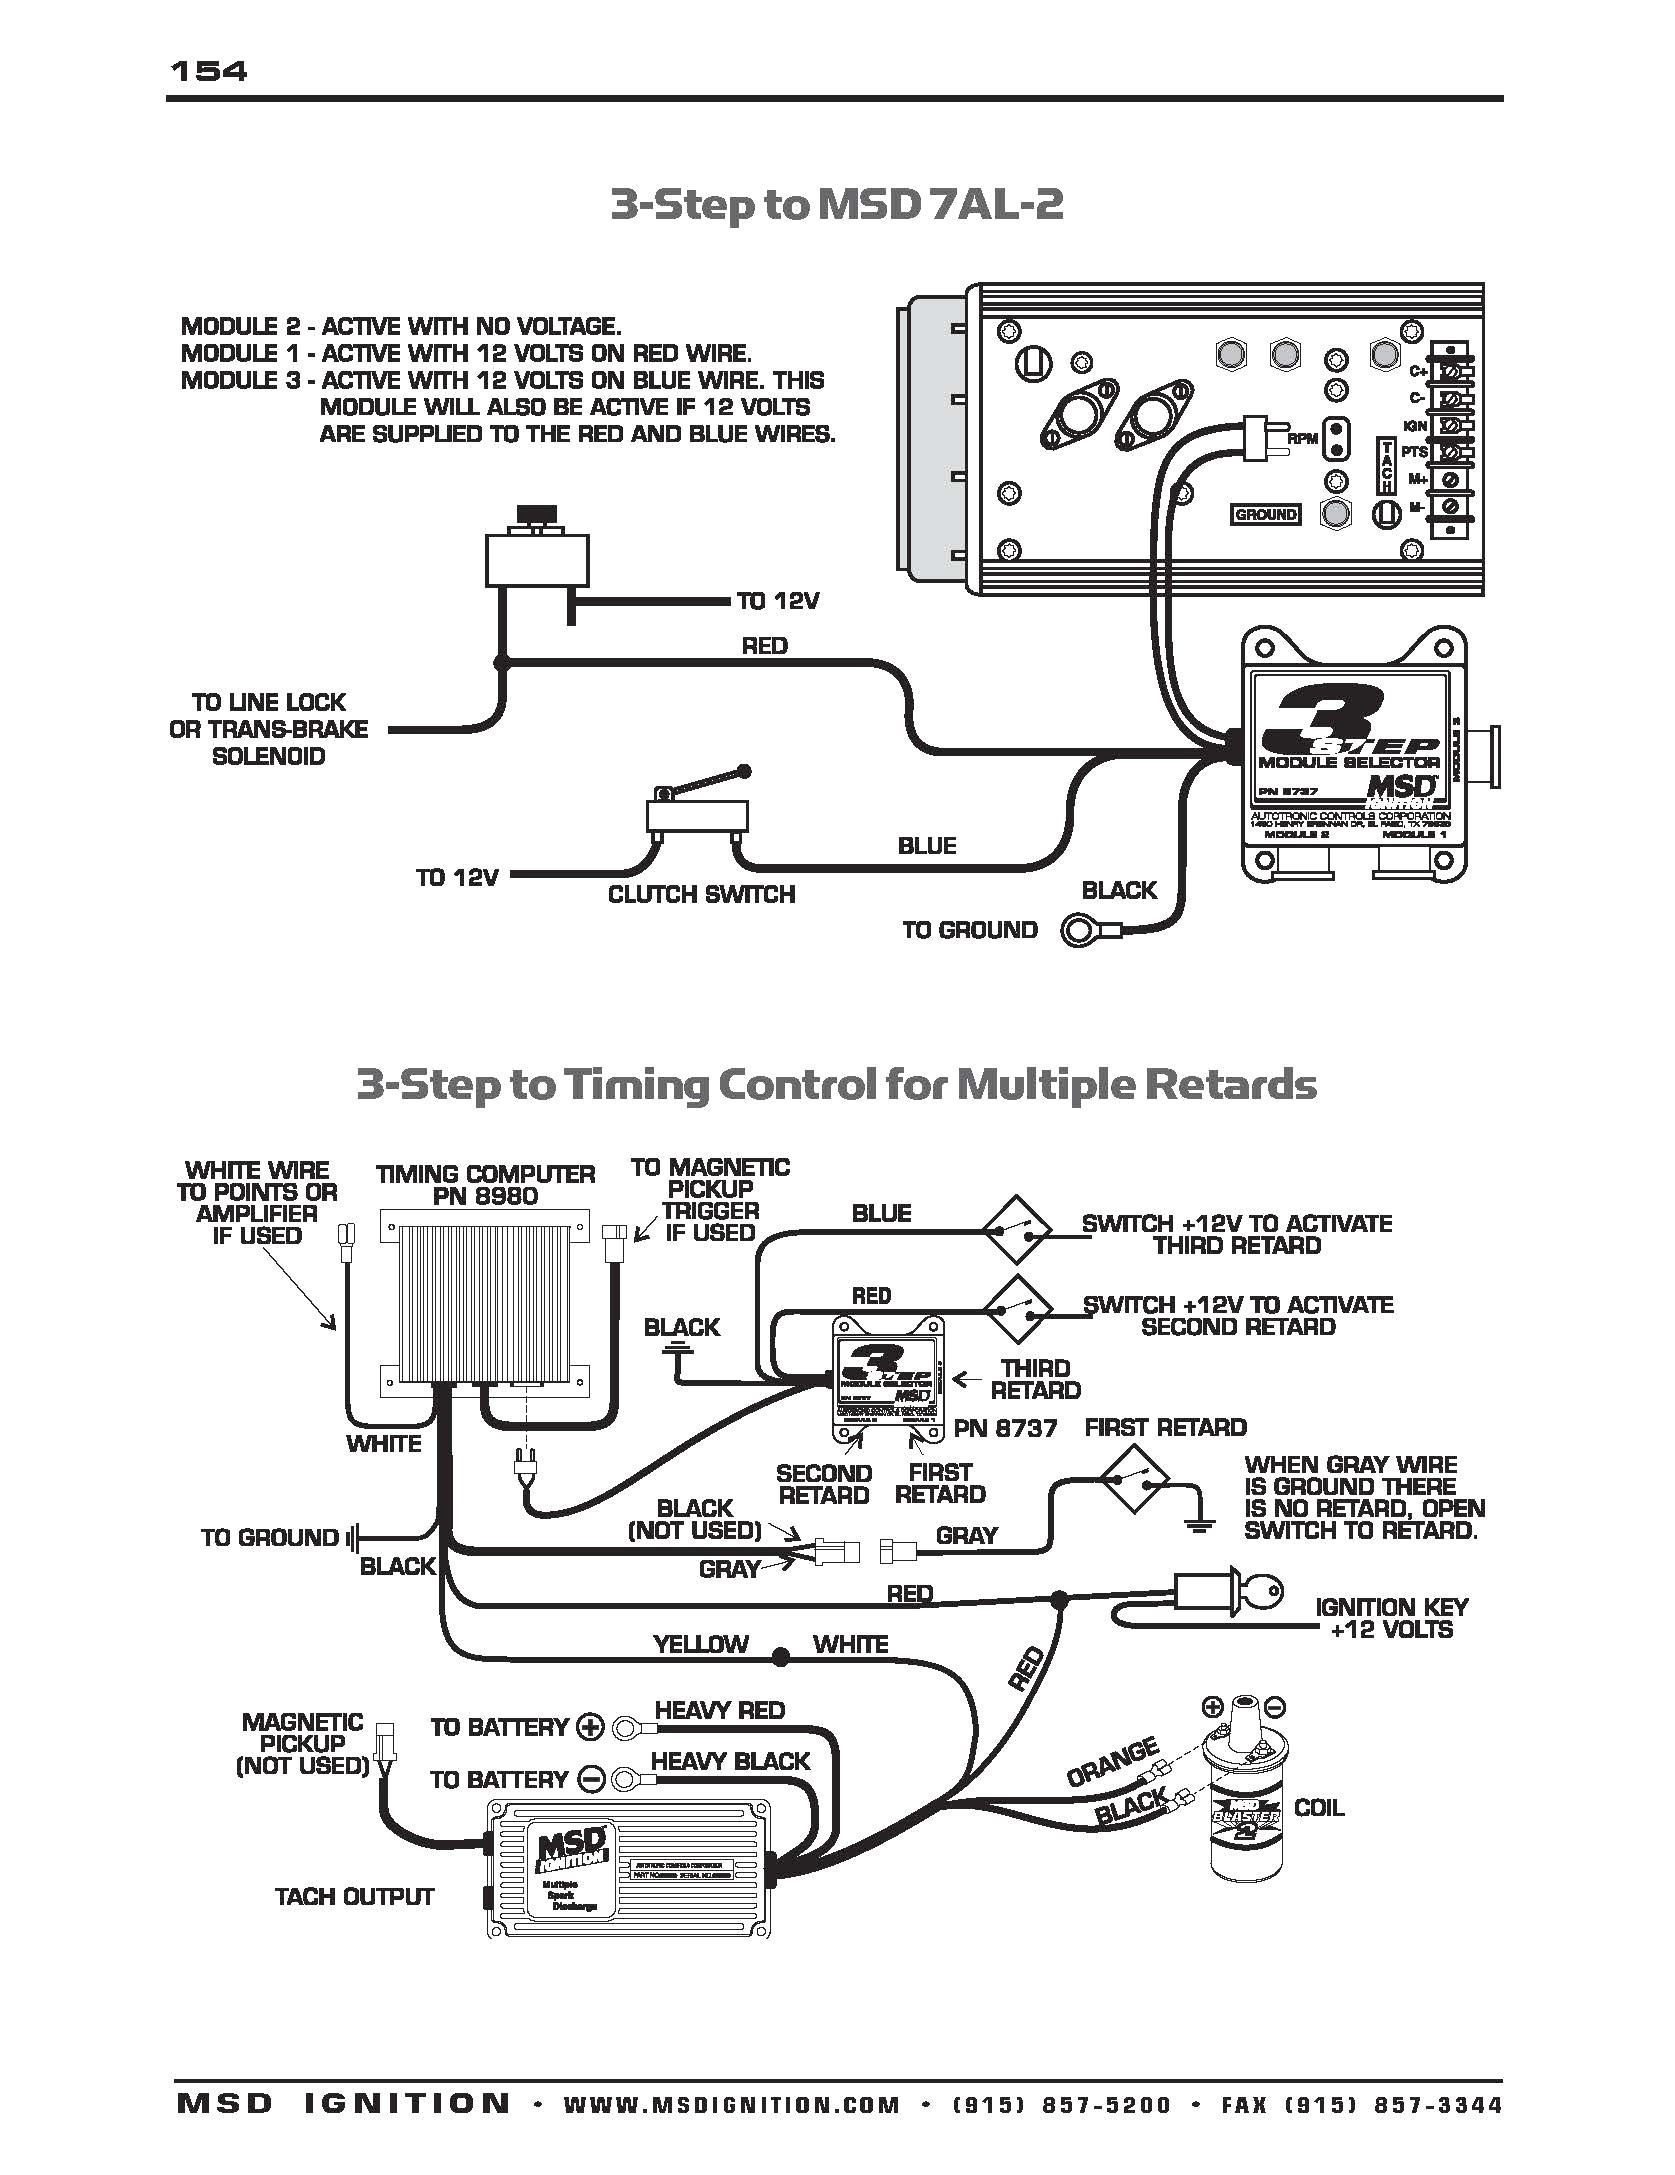 msd 3 wire schematic wiring diagram name msd 7al 3 ignition wiring diagram